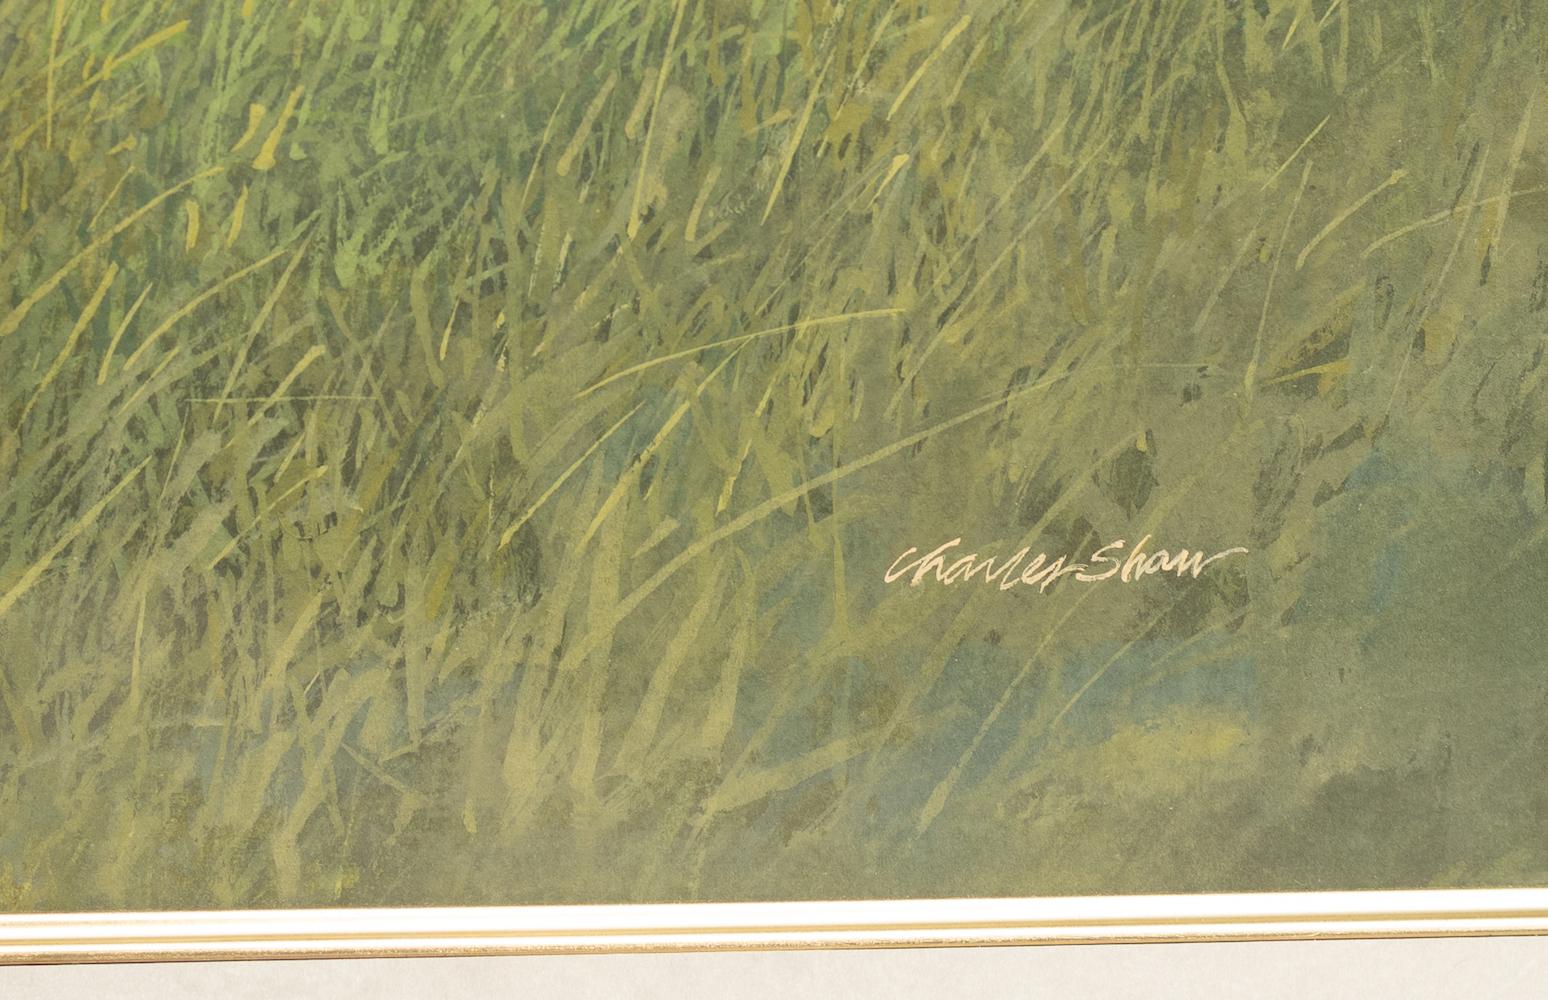 « Paysage en cristal avec rames de plage » Blue Sky Green Grass Girl Beach Grass - Après-guerre Art par Charles Shaw